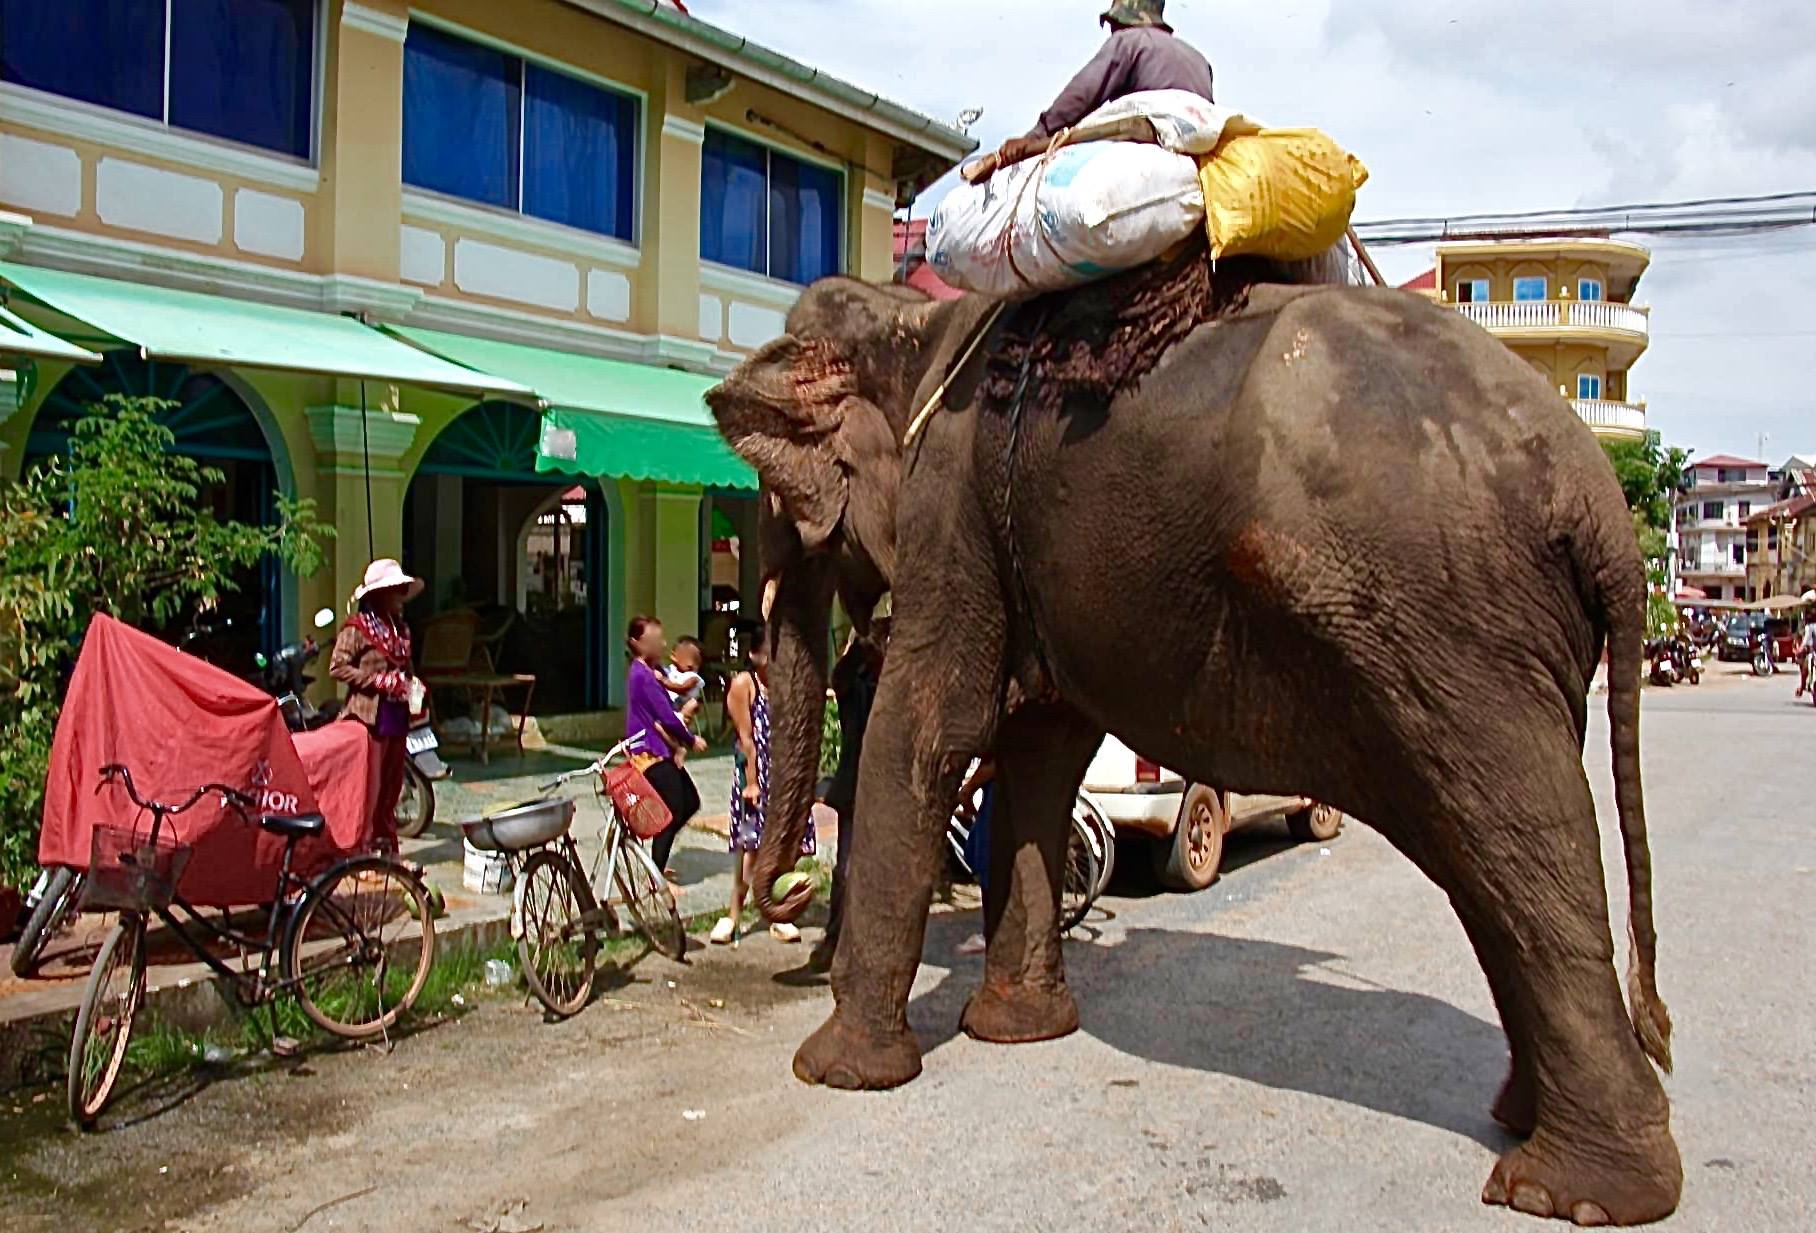 Revisiting Khmer’s “Last Street Elephant”